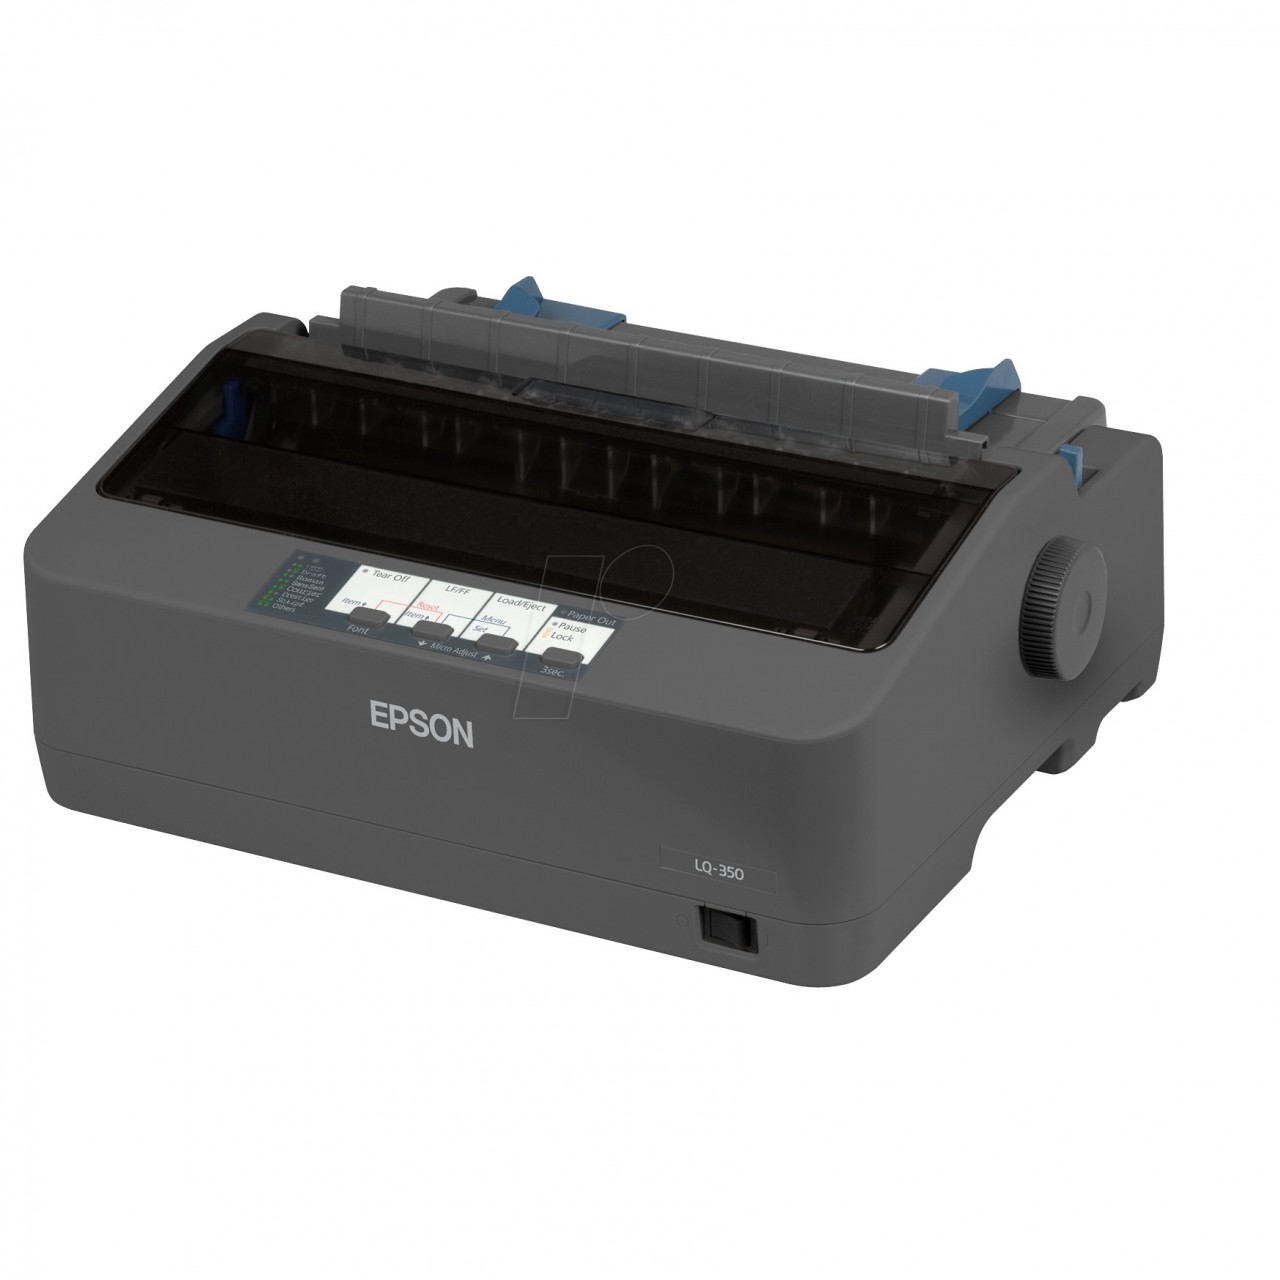 Epson Printer LQ350 –Grey